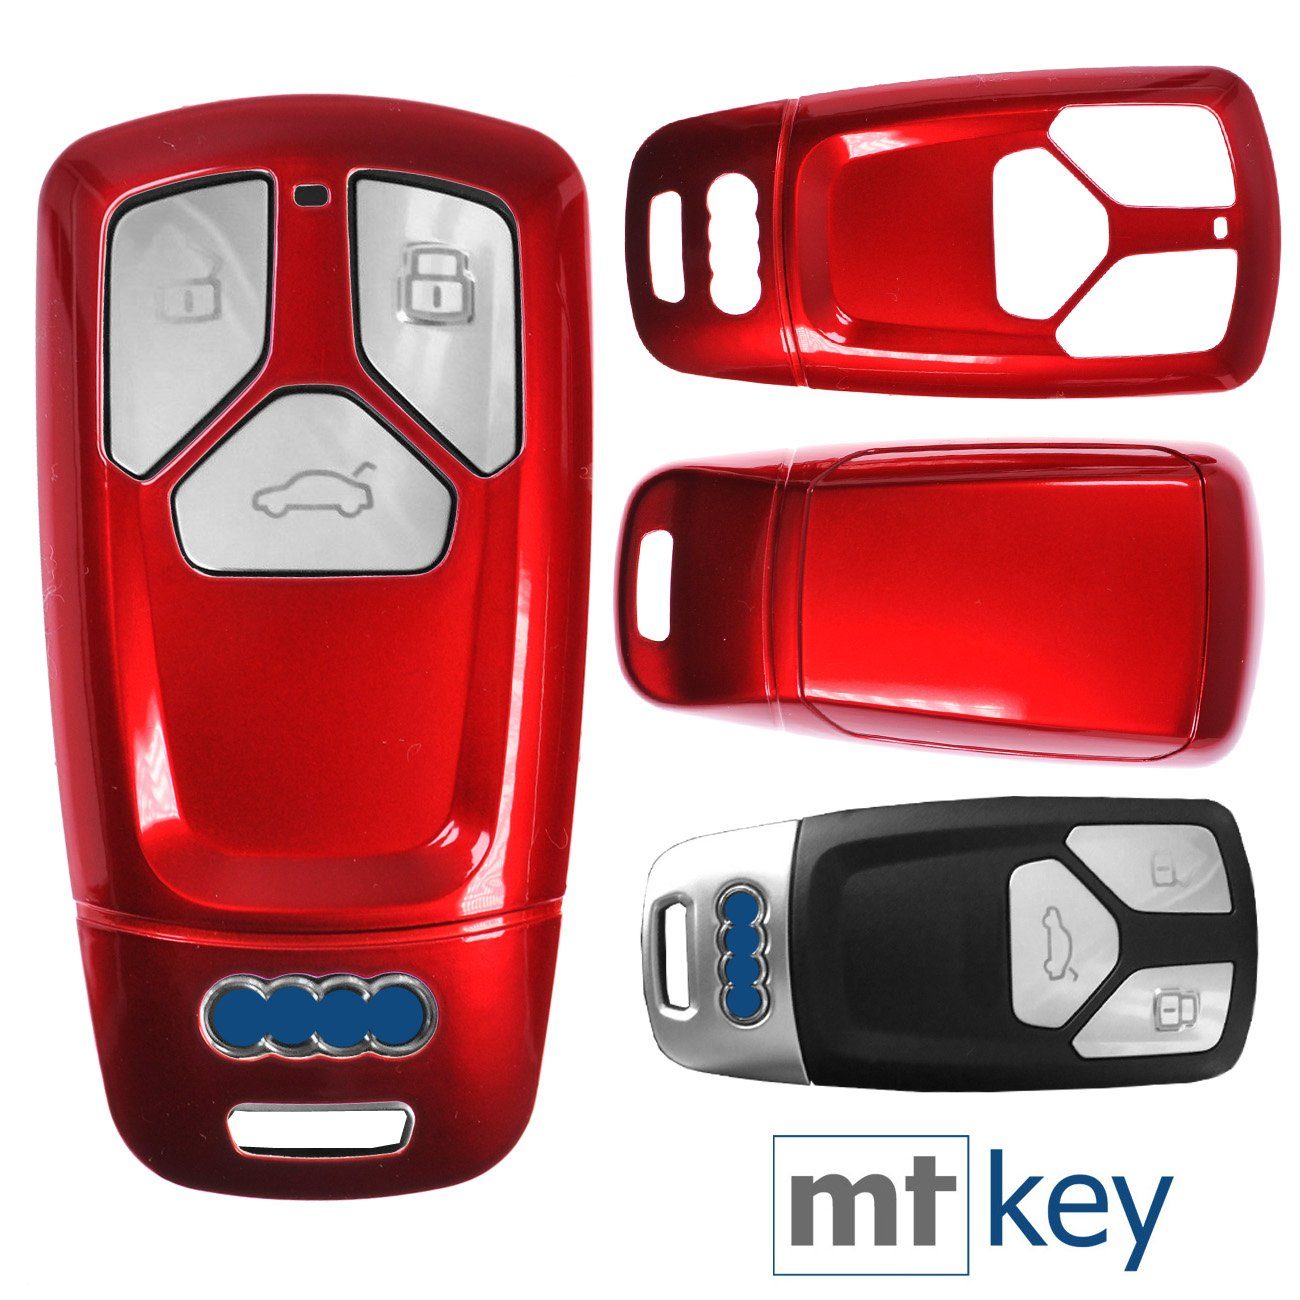 mt-key Schlüsseltasche Autoschlüssel Hardcover Schutzhülle Metallic Rot, für Audi A4 A5 A6 A7 TT Q2 Q5 Q7 A8 Q8 KEYLESS SMARTKEY